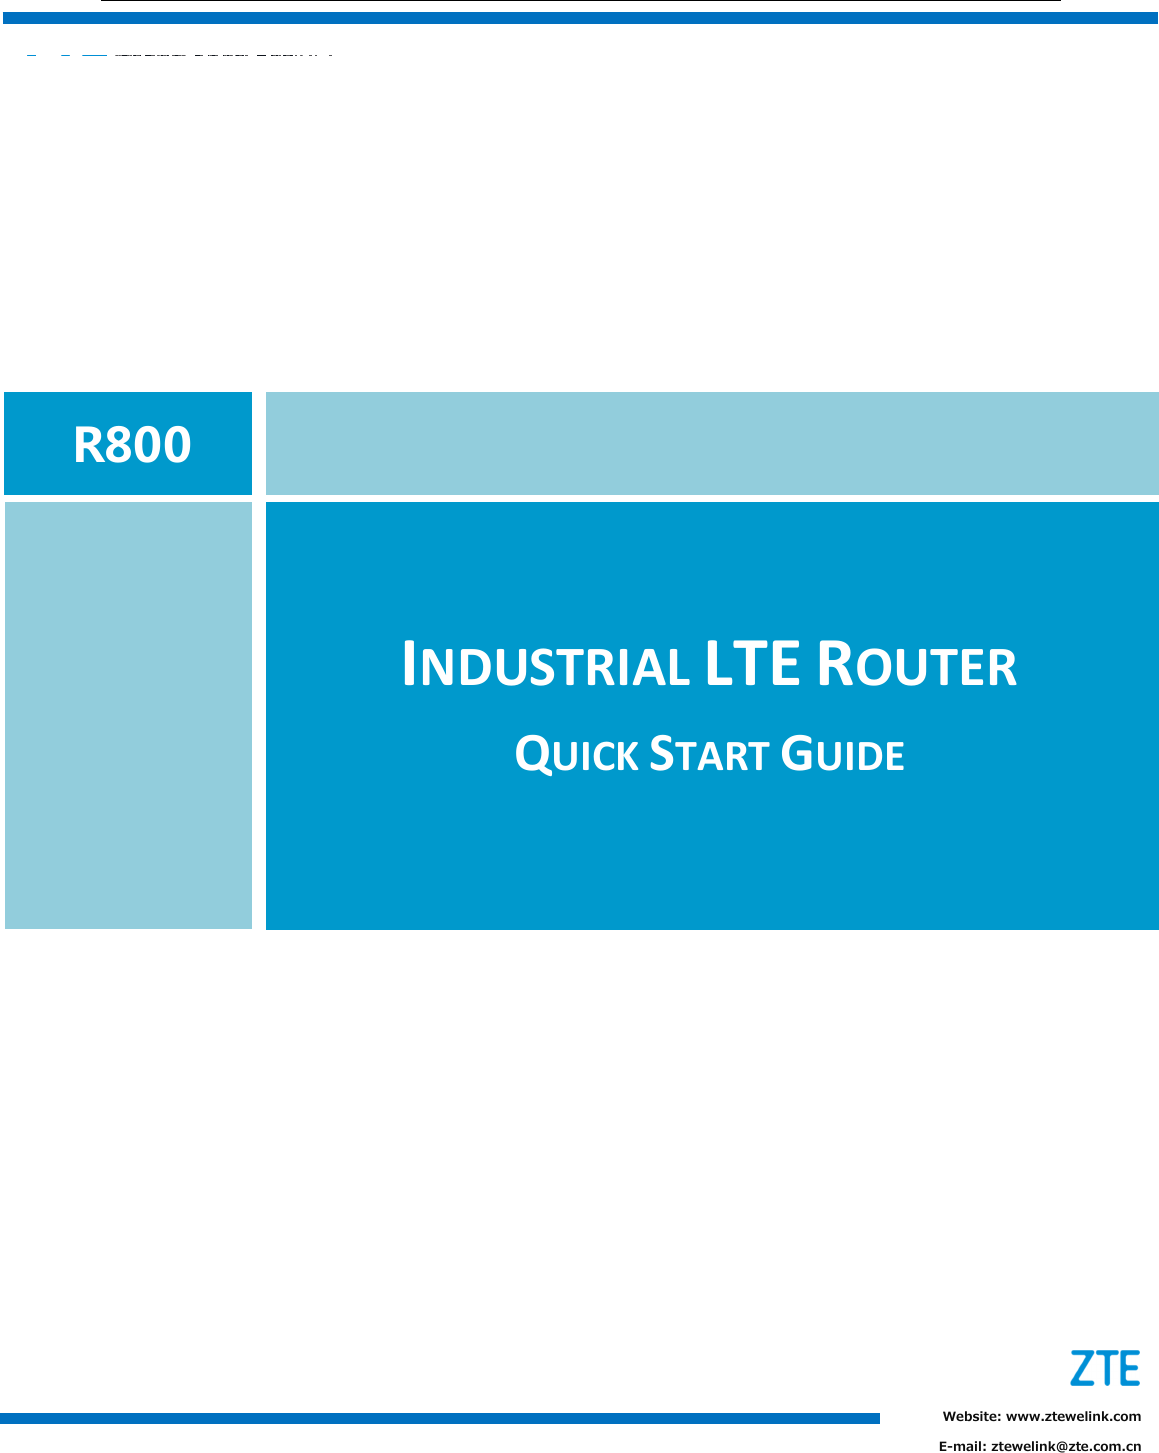   I                                  INDUSTRIAL LTE ROUTER  QUICK START GUIDE R800 Website: www.ztewelink.com E-mail: ztewelink@zte.com.cn 